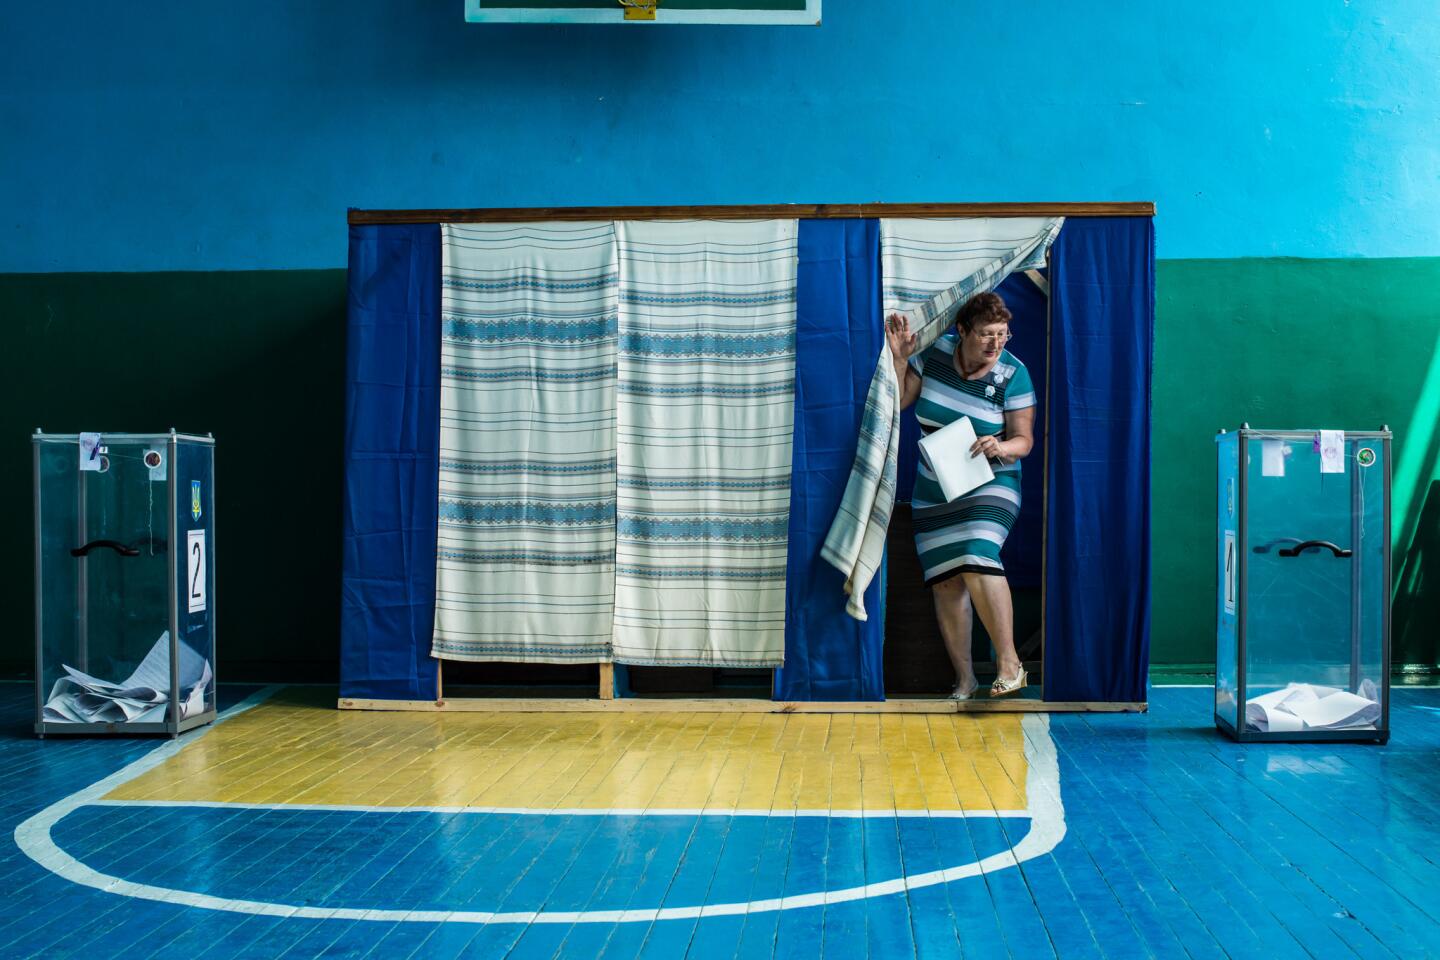 Ukrainians go to the polls